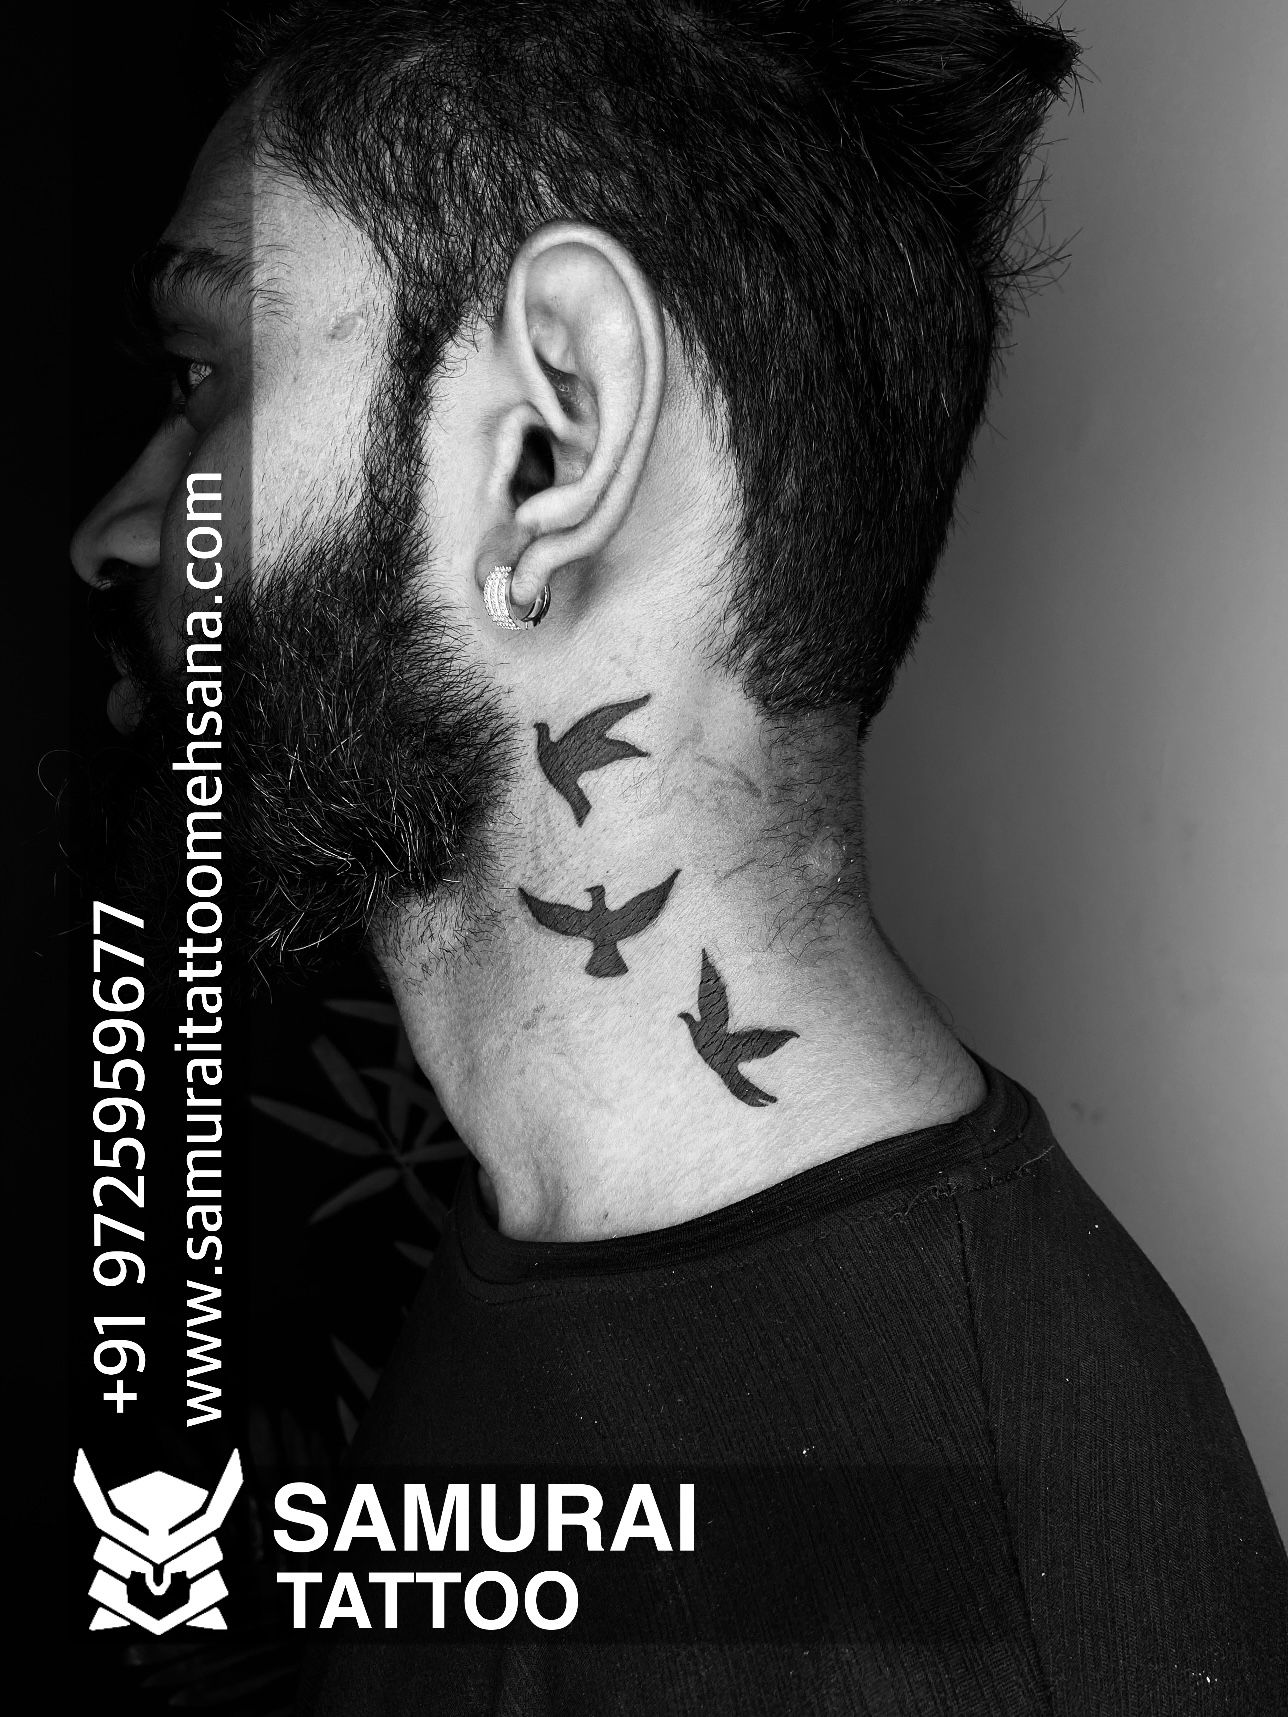 Tattoo uploaded by Vipul Chaudhary • Birds tattoo |Birds tattoo on neck |Neck  tattoo design |Neck tattoo |Tattoo on neck |Neck tattoo for boys • Tattoodo